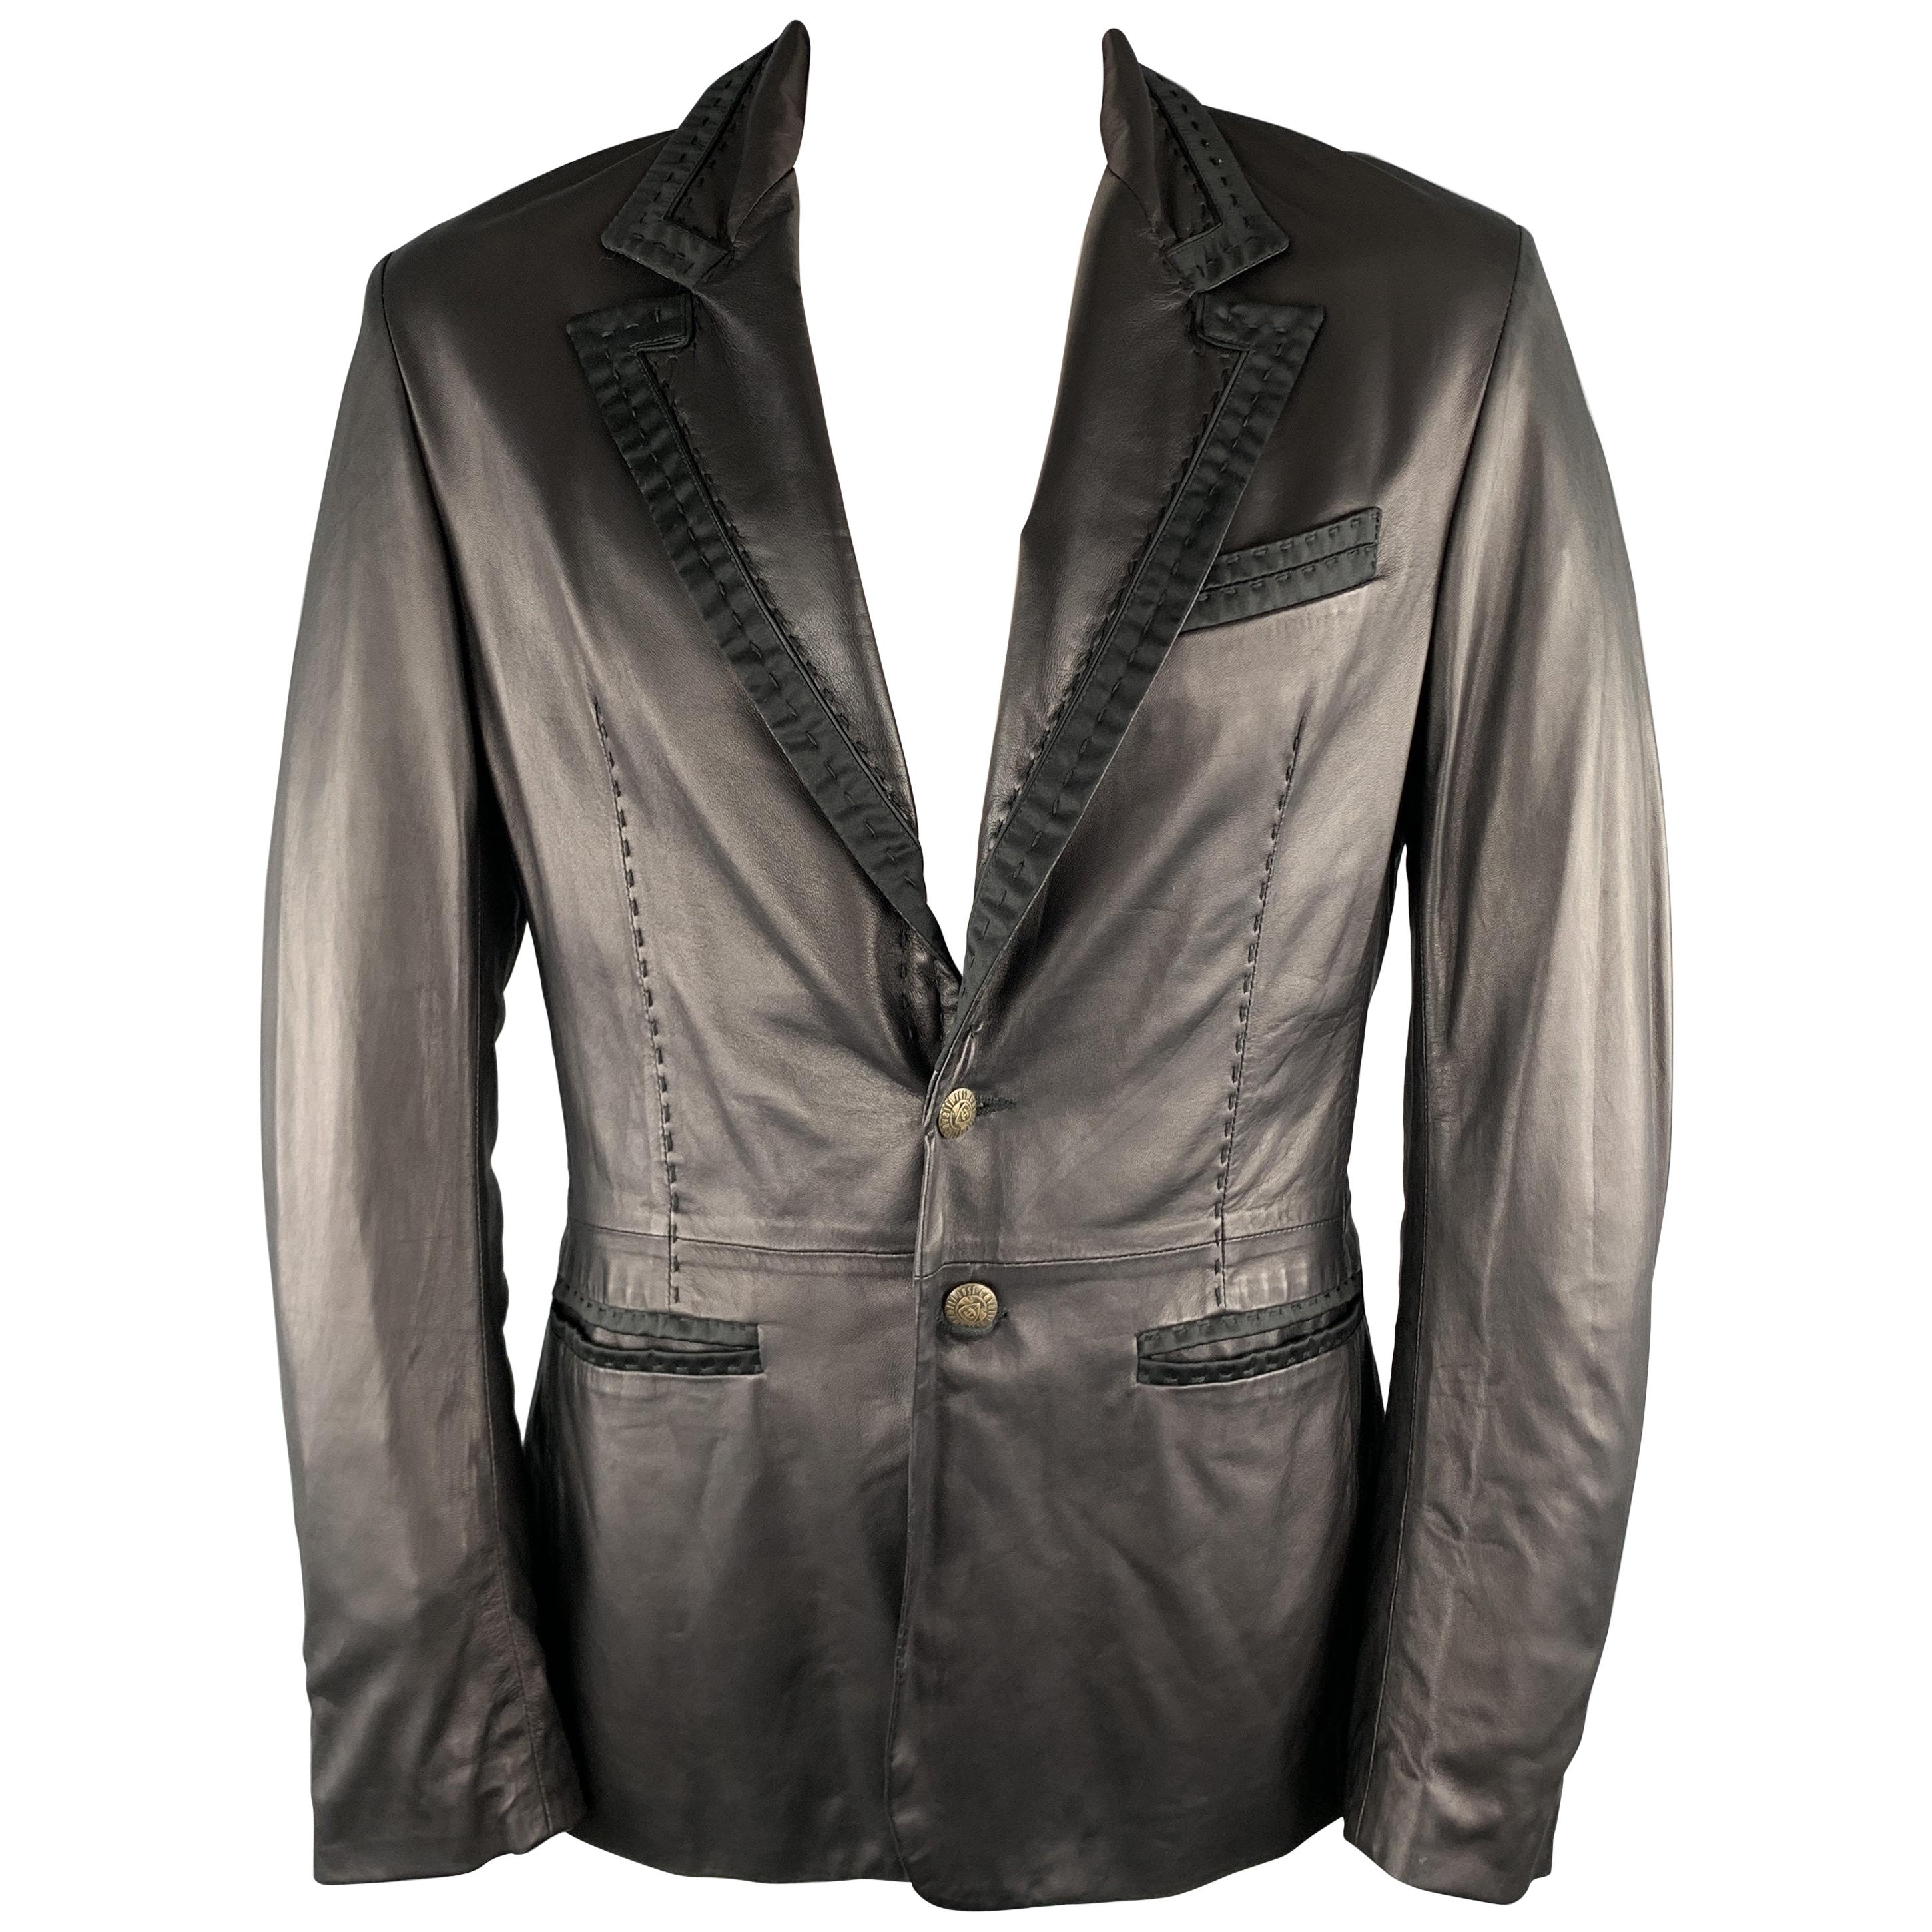 JUST CAVALLI Size XXL Black Solid Leather Peak Lapel Jacket